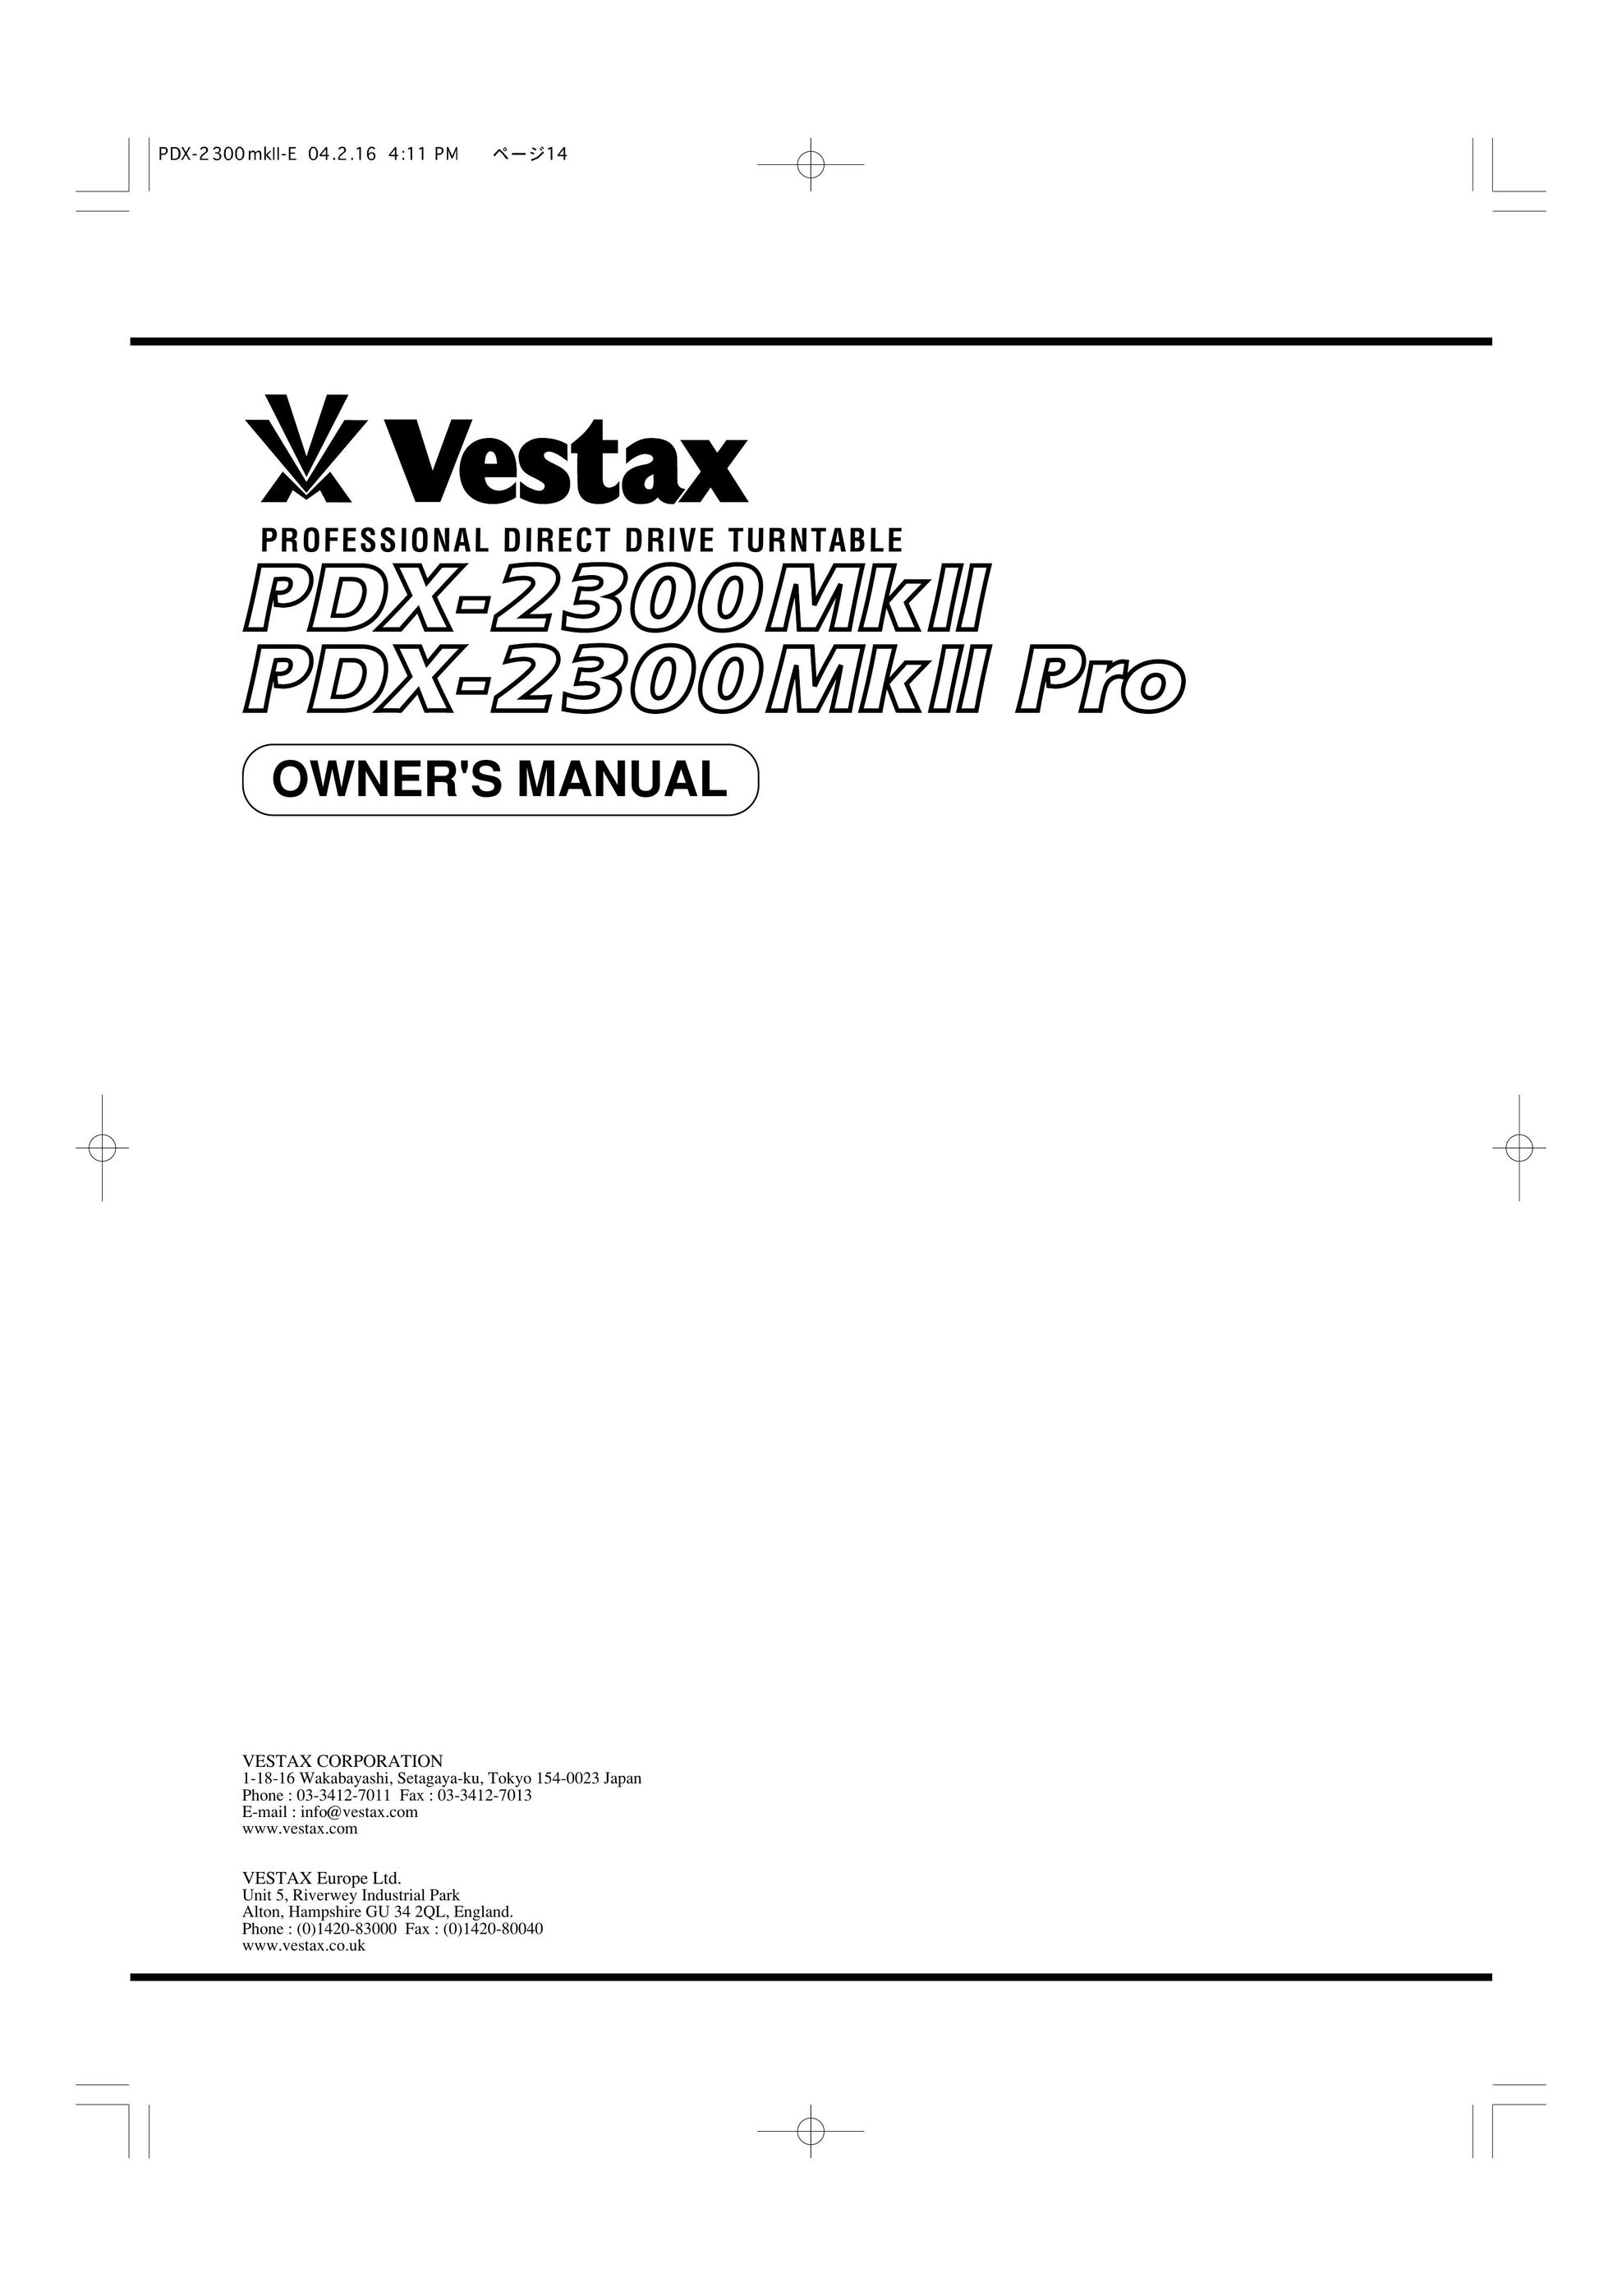 Vestax PDX-2300MkII Turntable User Manual